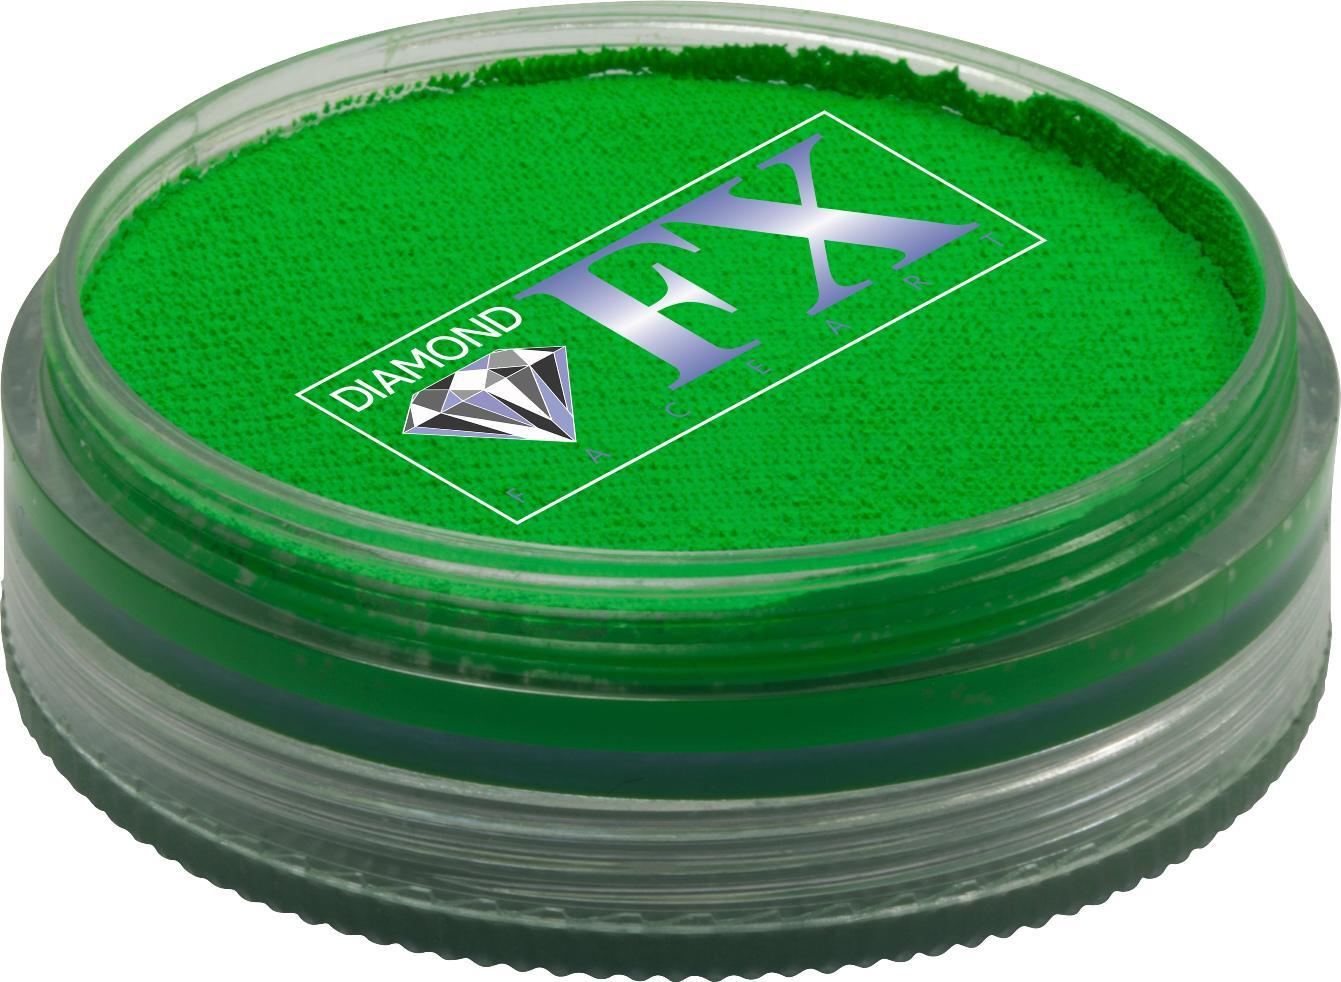 Diamond FX Green Neon 45g - Small Image